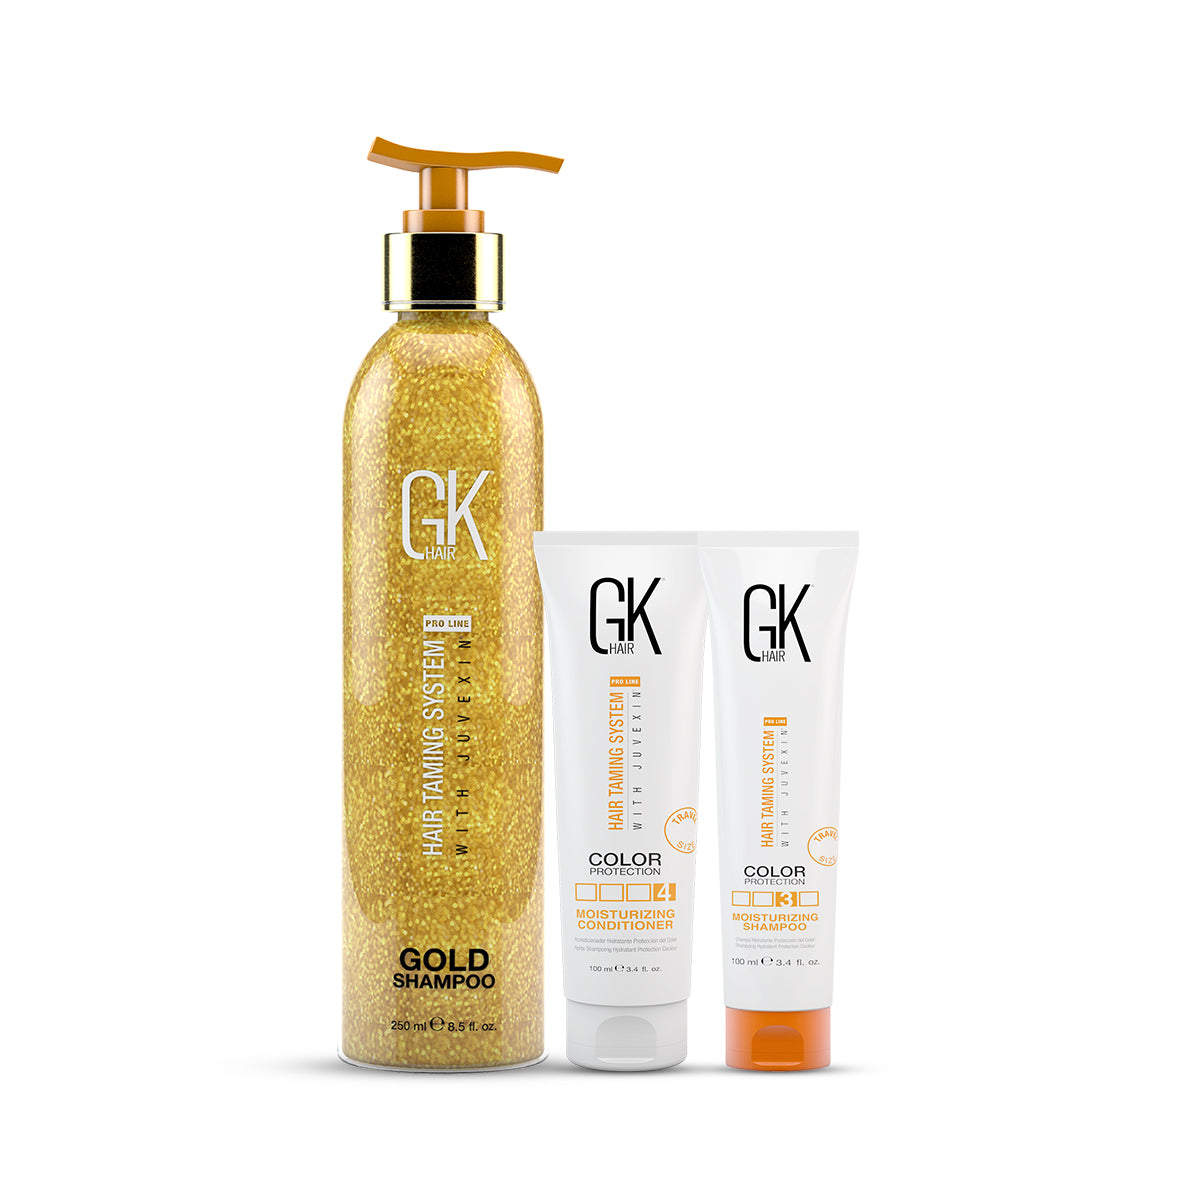 GK Hair Moisturizing Shampoo and Conditioner 100 Ml with Gold Shampoo 250 Ml